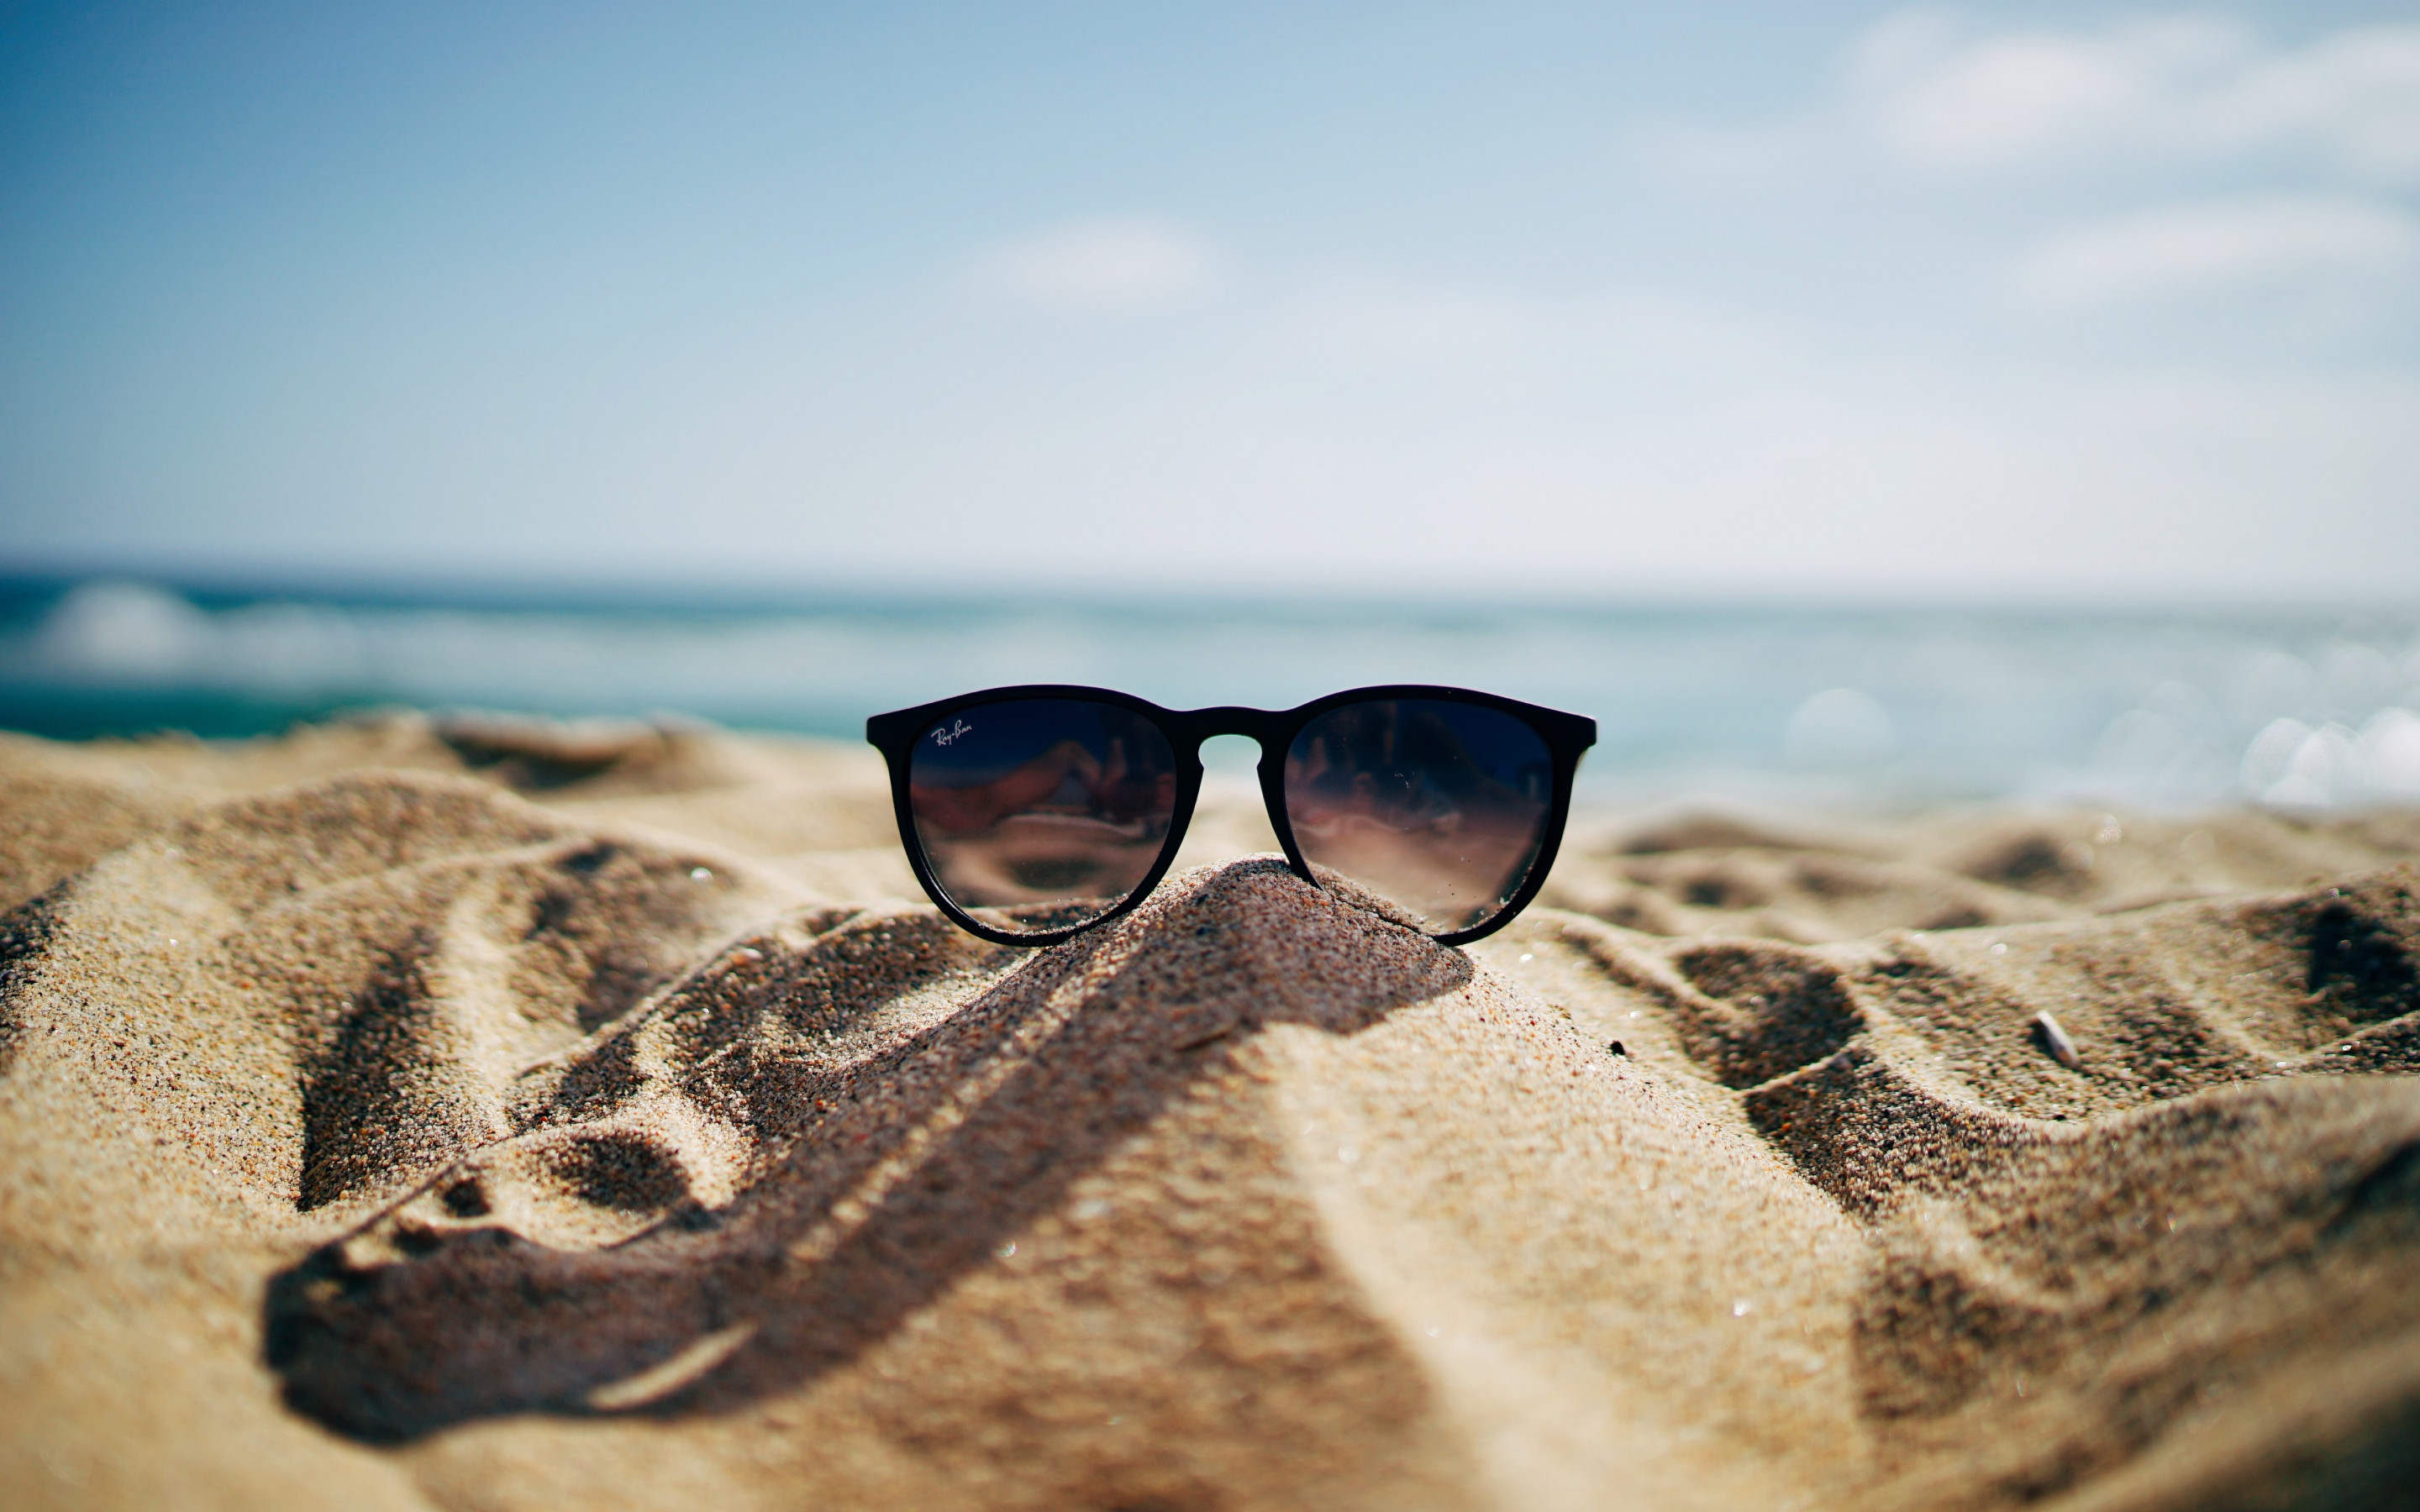 Ray Ban sunglasses on hot sand beach wallpaper 2880x1800